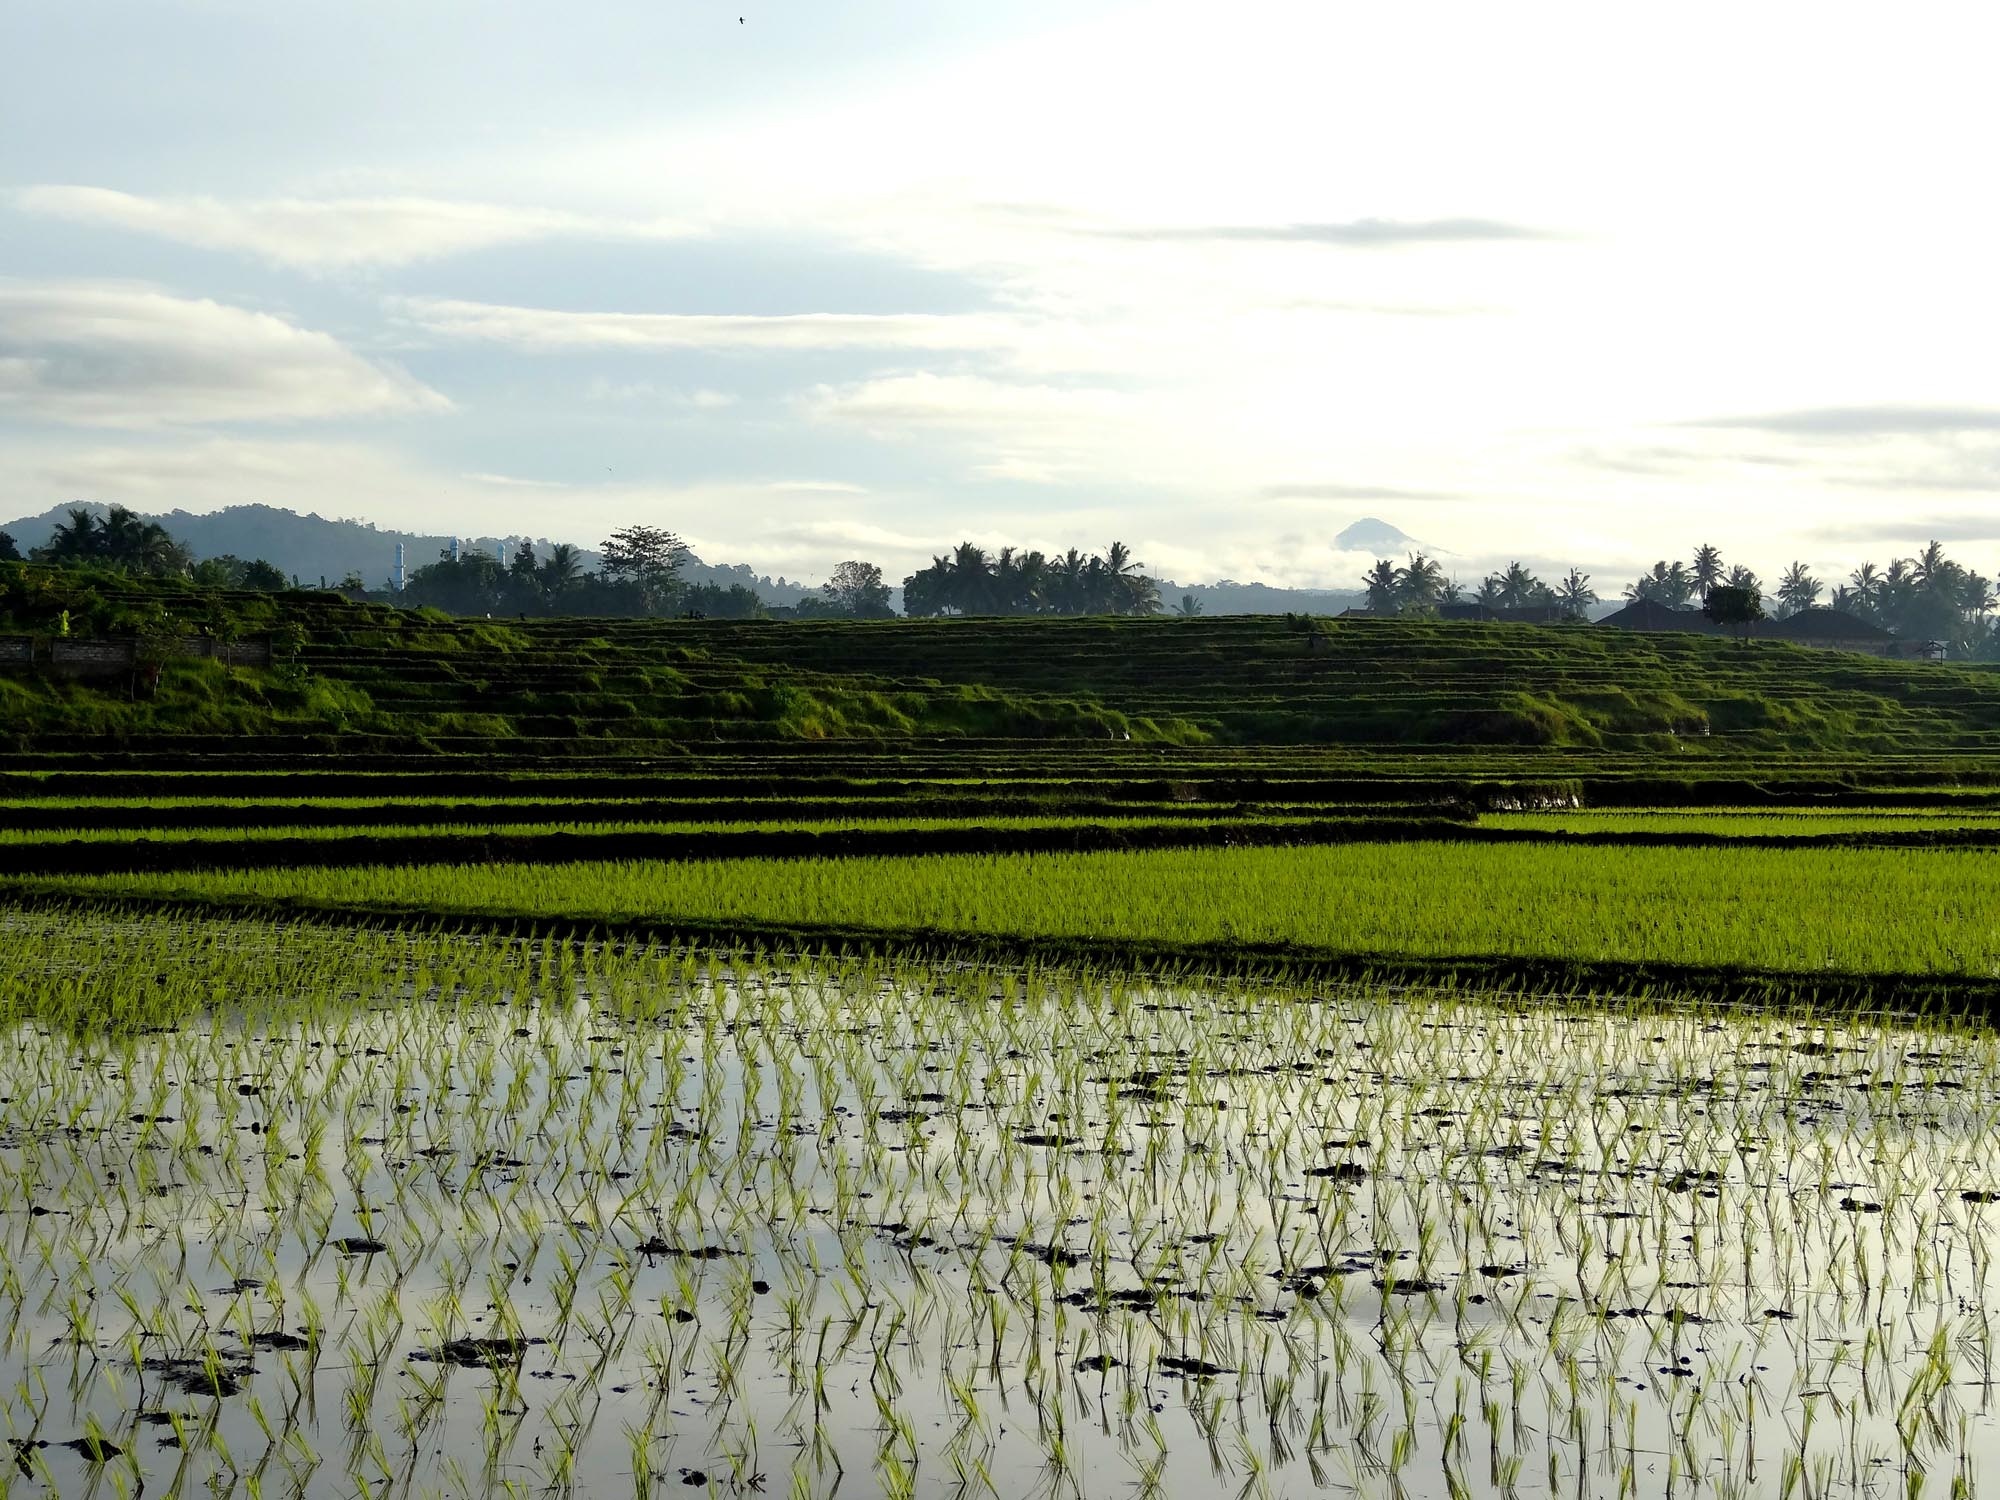 All Bali land should be under deed by 2019, says Indonesian President Joko Widodo. Photo: Alice Karolina Smith/Unsplash